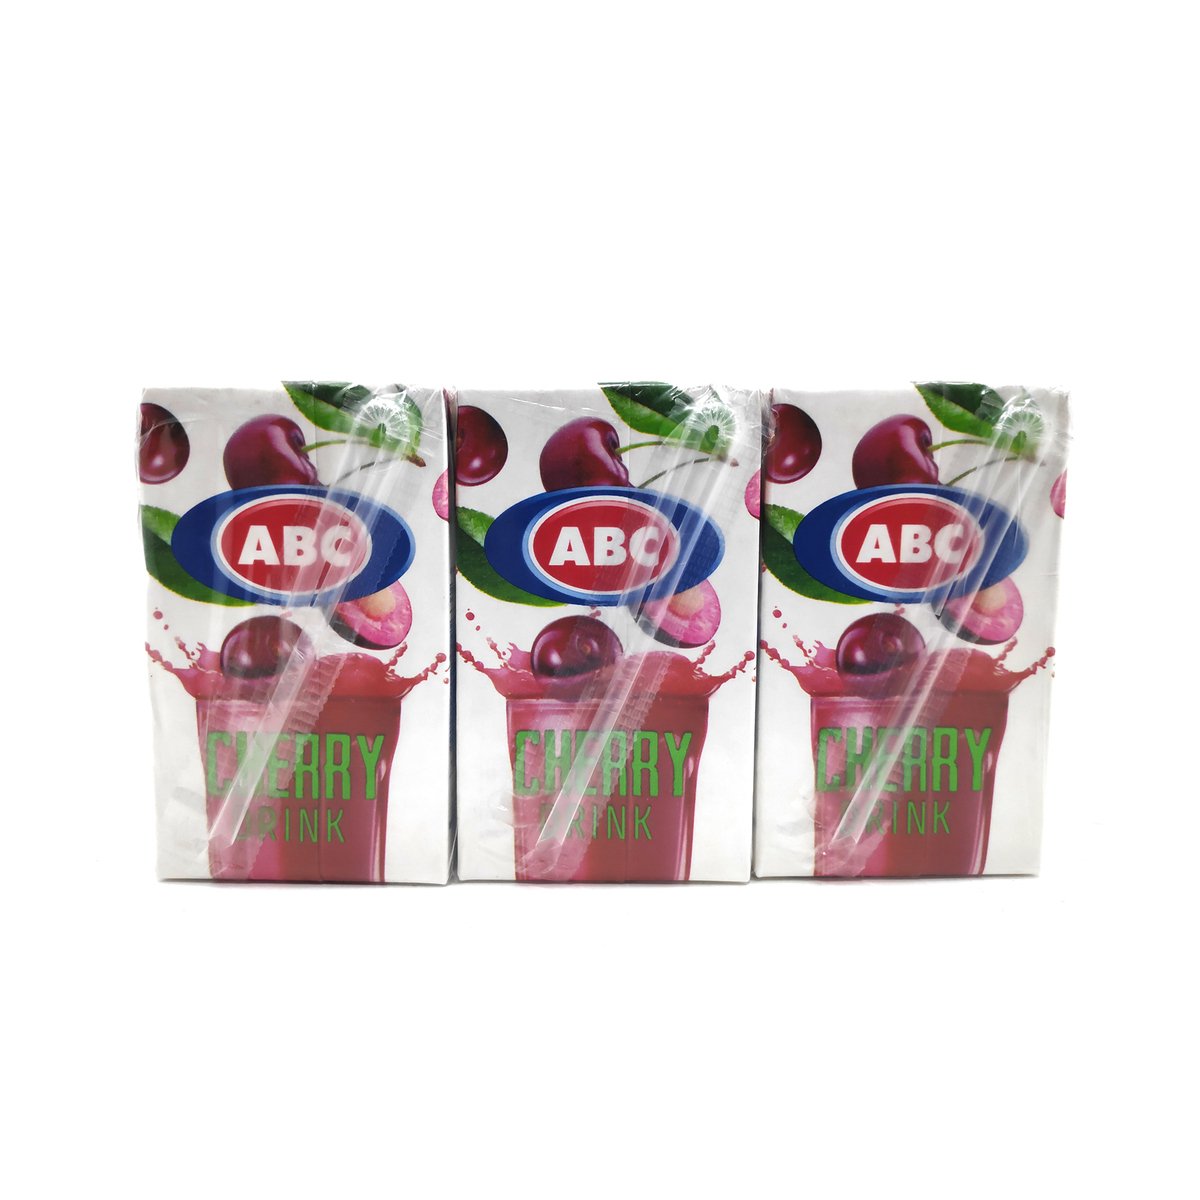 ABC Cherry Drink 6 x 250ml